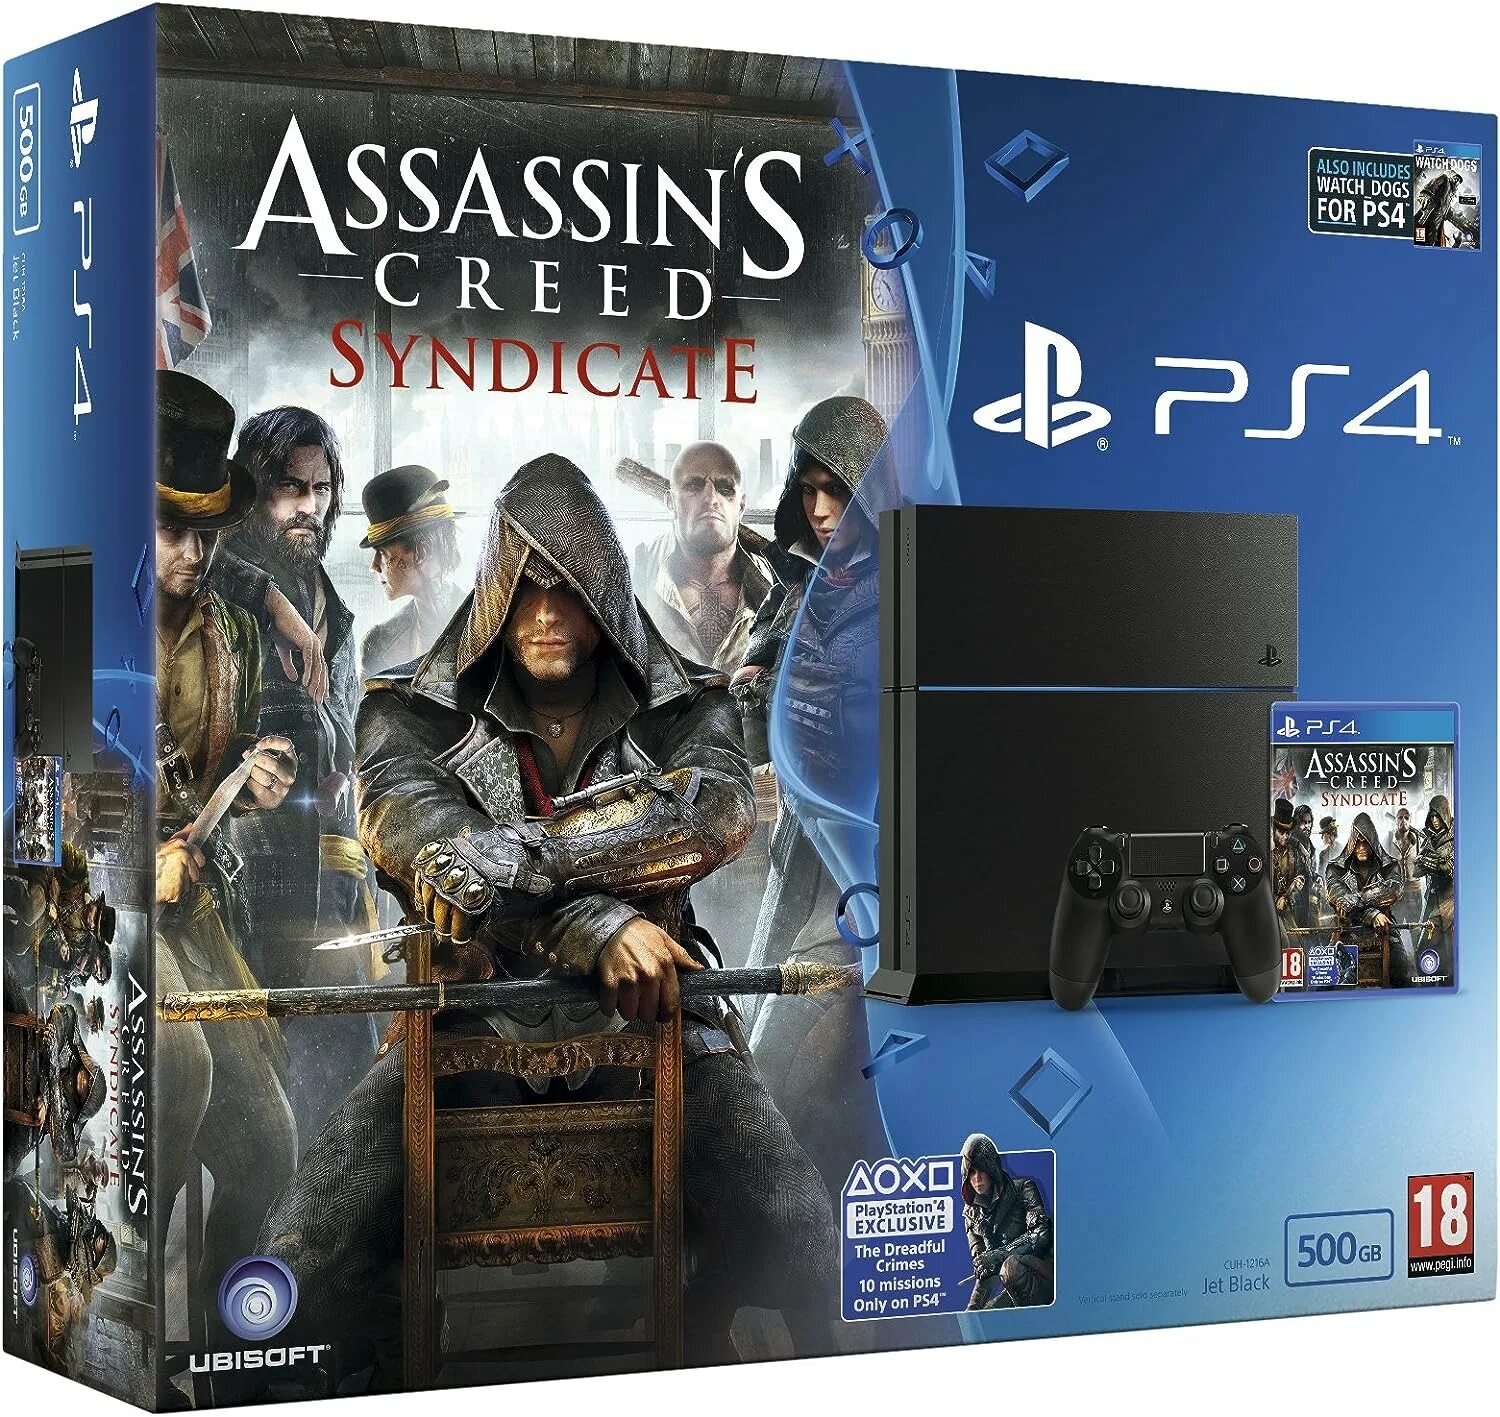 Ps4 читать. Ps4 диск Assassins Creed 1. PLAYSTATION 4 диски ассасин 2. Ассасин Крид Синдикат диск ПС 4. Assassin's Creed Синдикат ps4 диск.